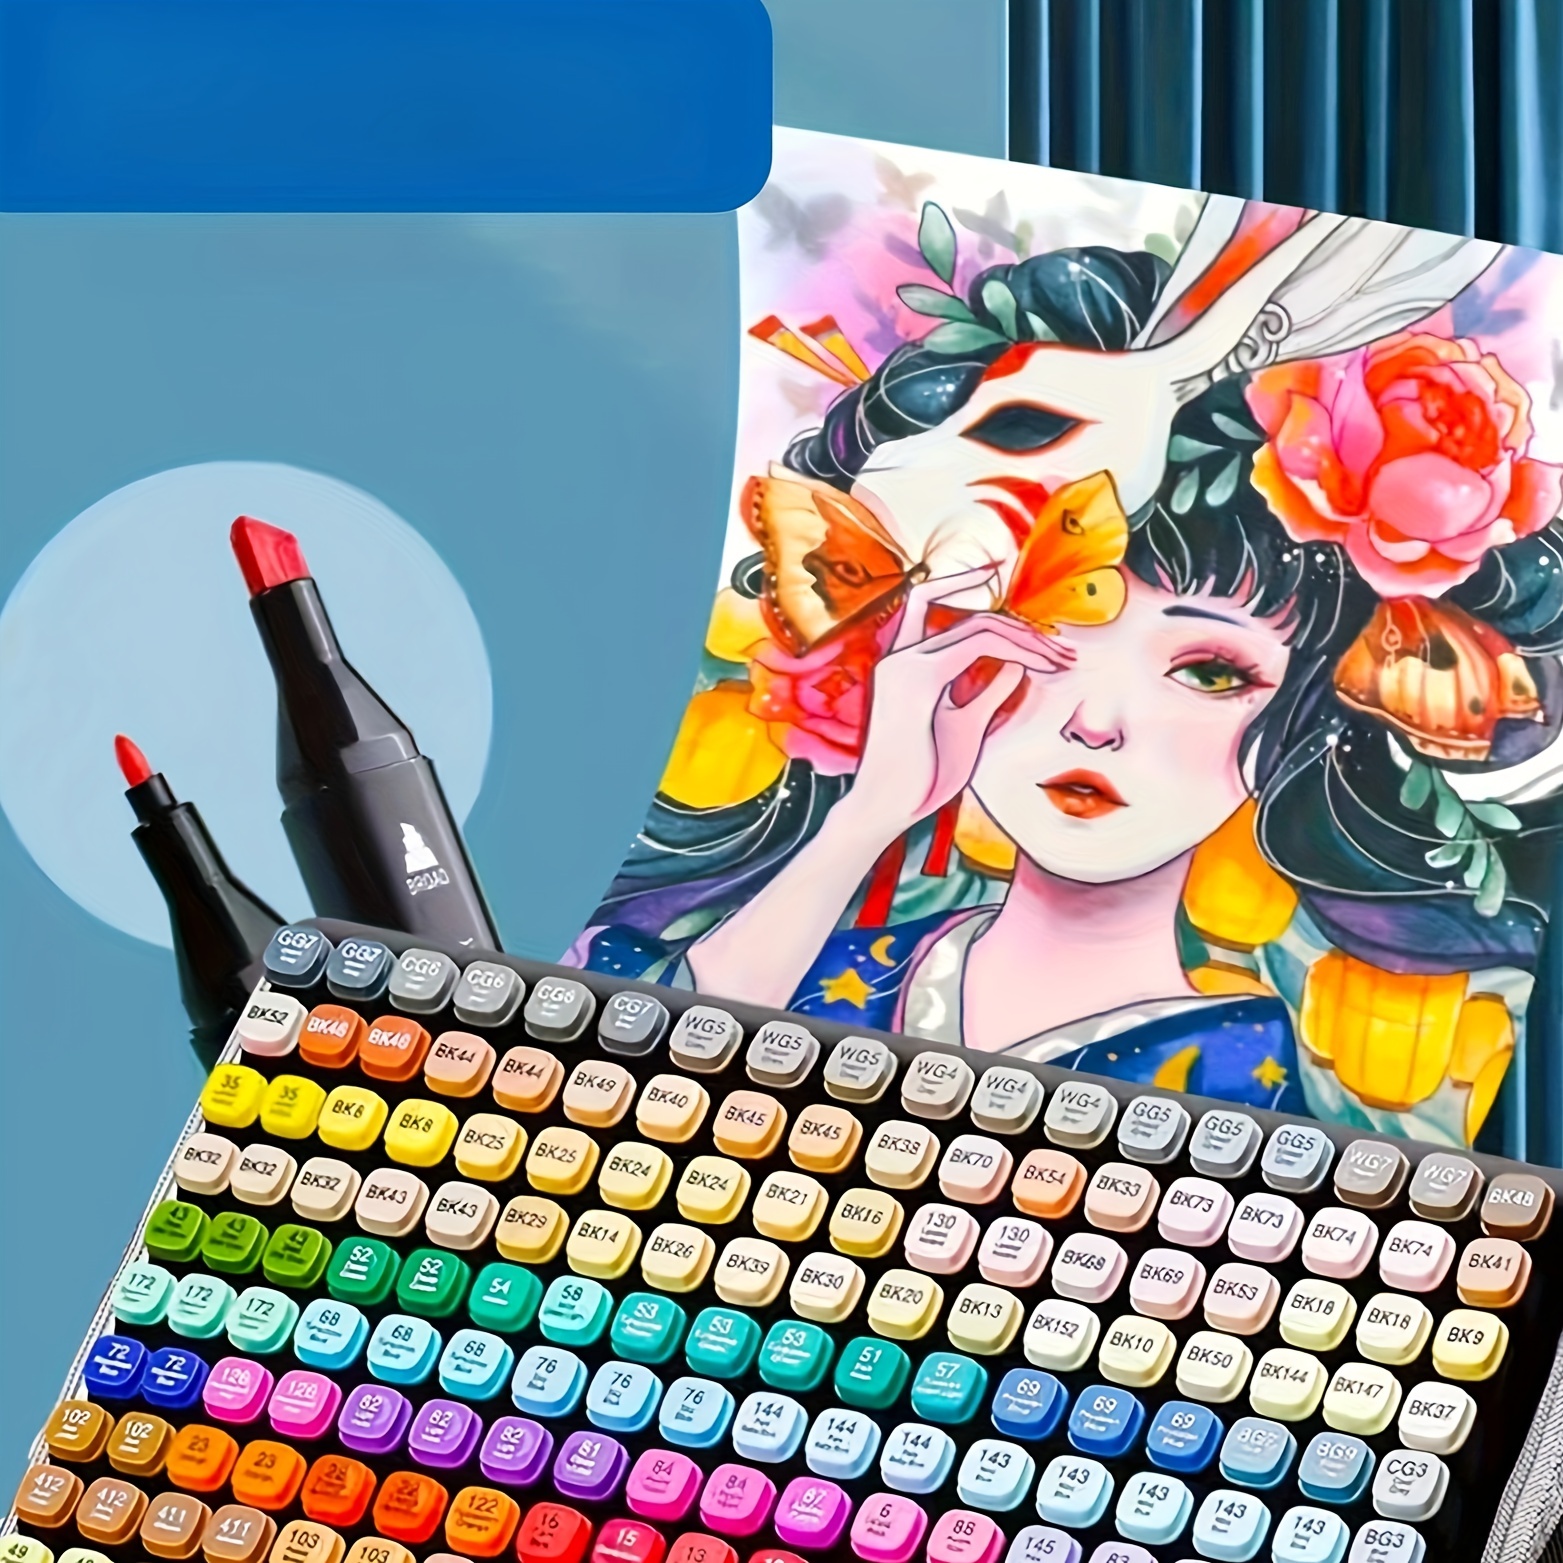 Alcohol Art Markers Set, Dual Tip, Brush & Chisel, Sketch Marker, Alcohol-Based  Brush Markers, Comes W/ 1 Blender for Sketching, Adult Coloring, and  Illustration (24-Basic-Color)